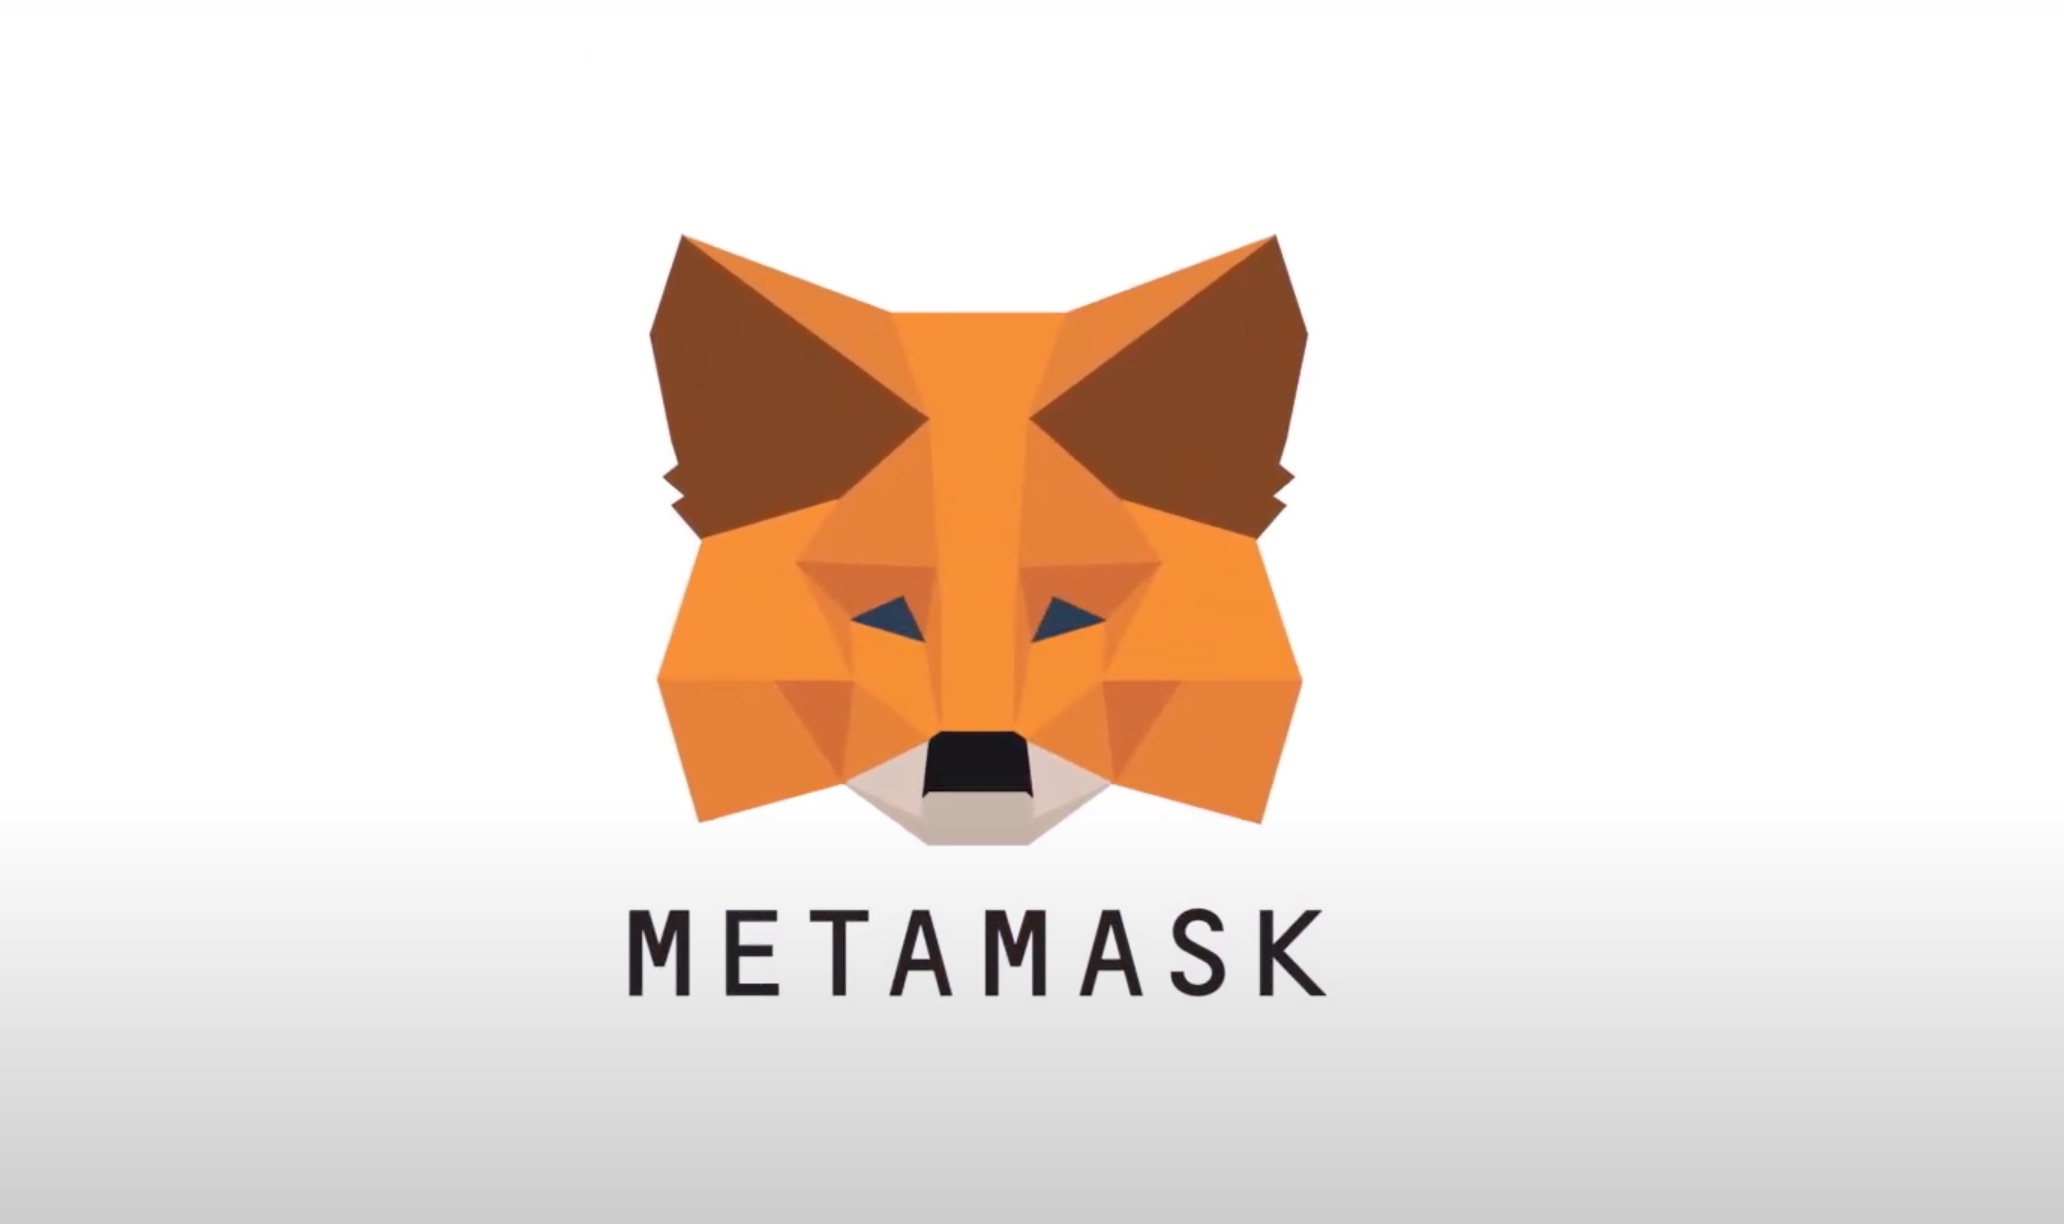 what is metamask